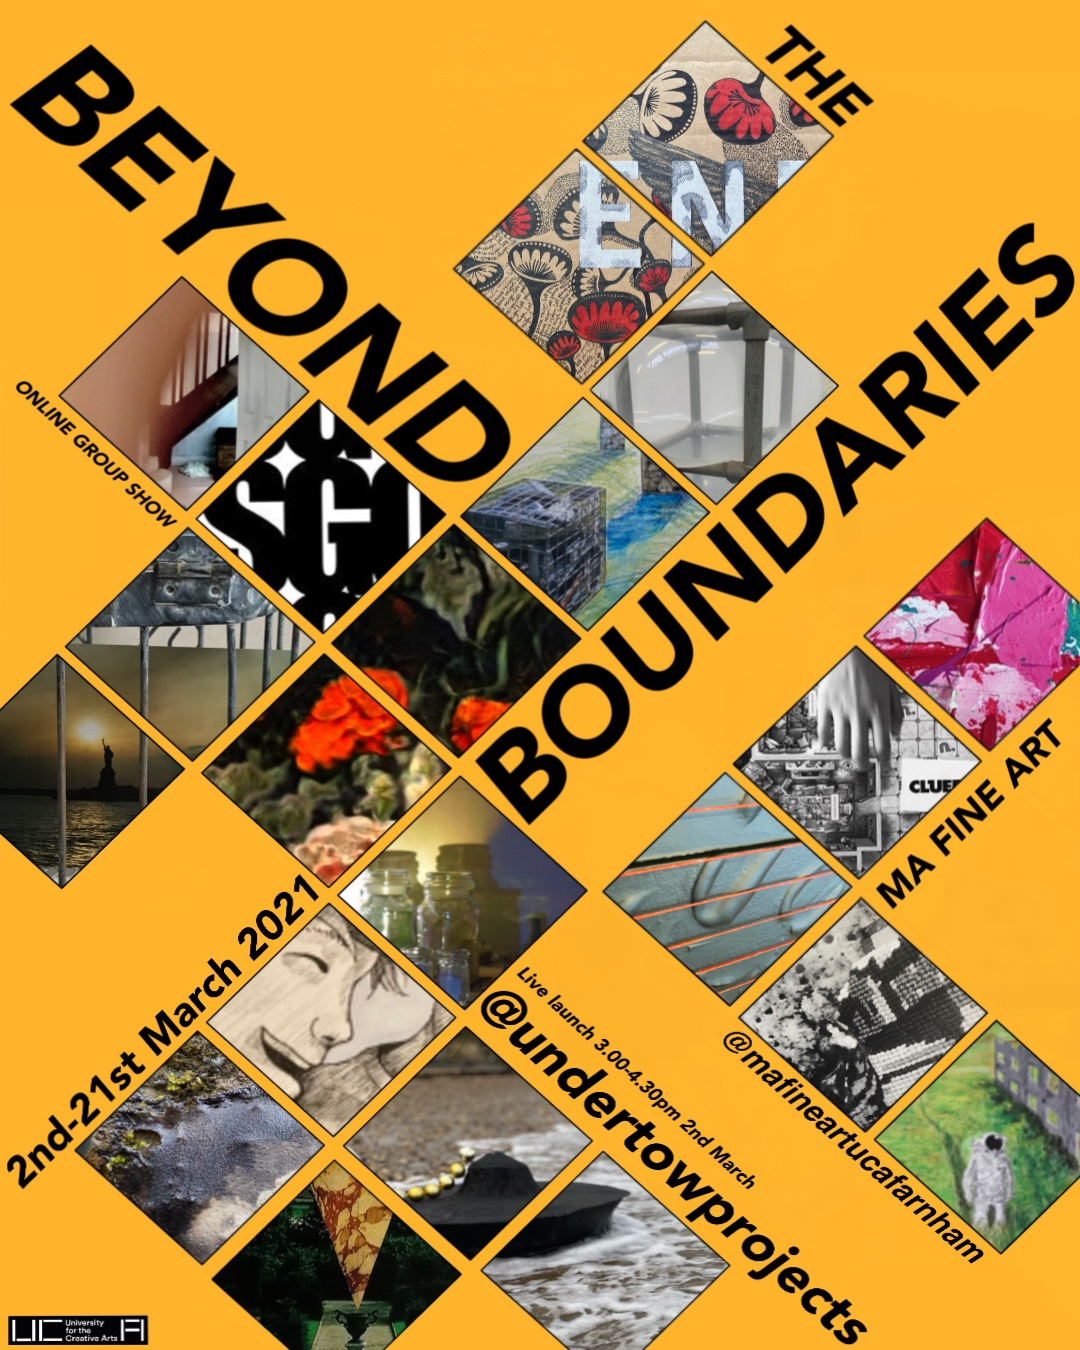 Beyond the Boundaries – interim group show